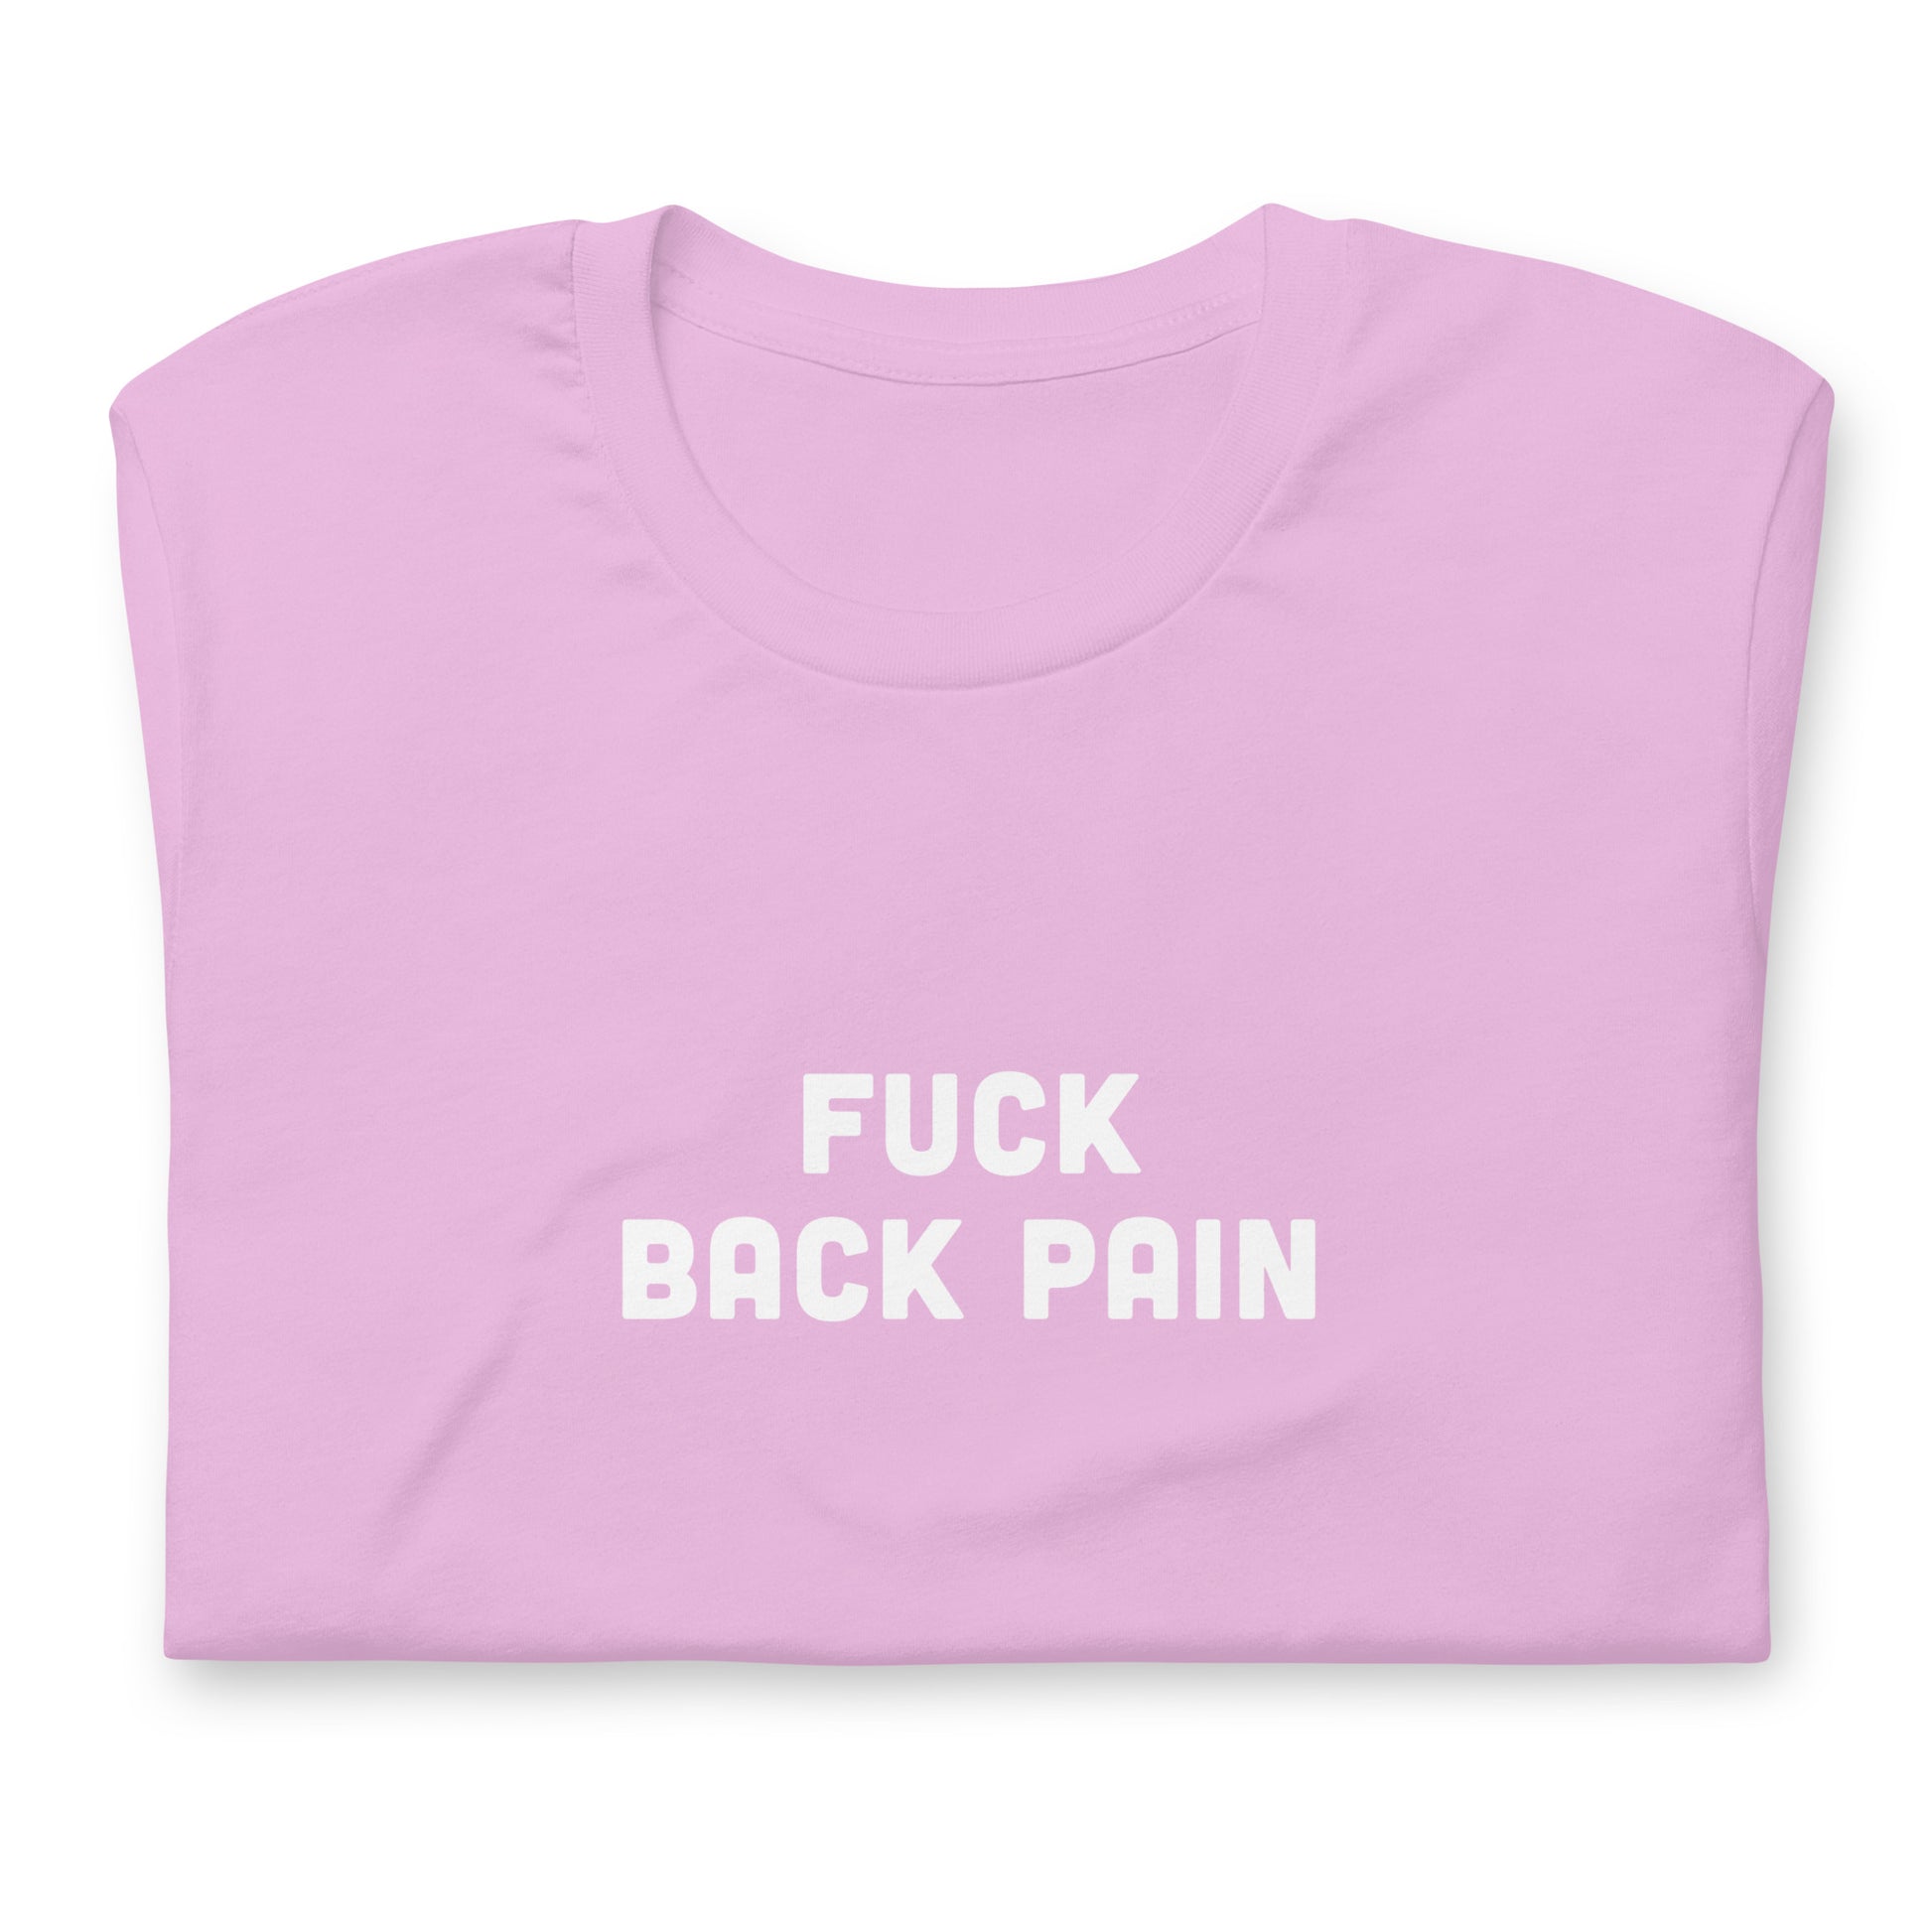 Fuck Back Pain T-Shirt Size XL Color Forest